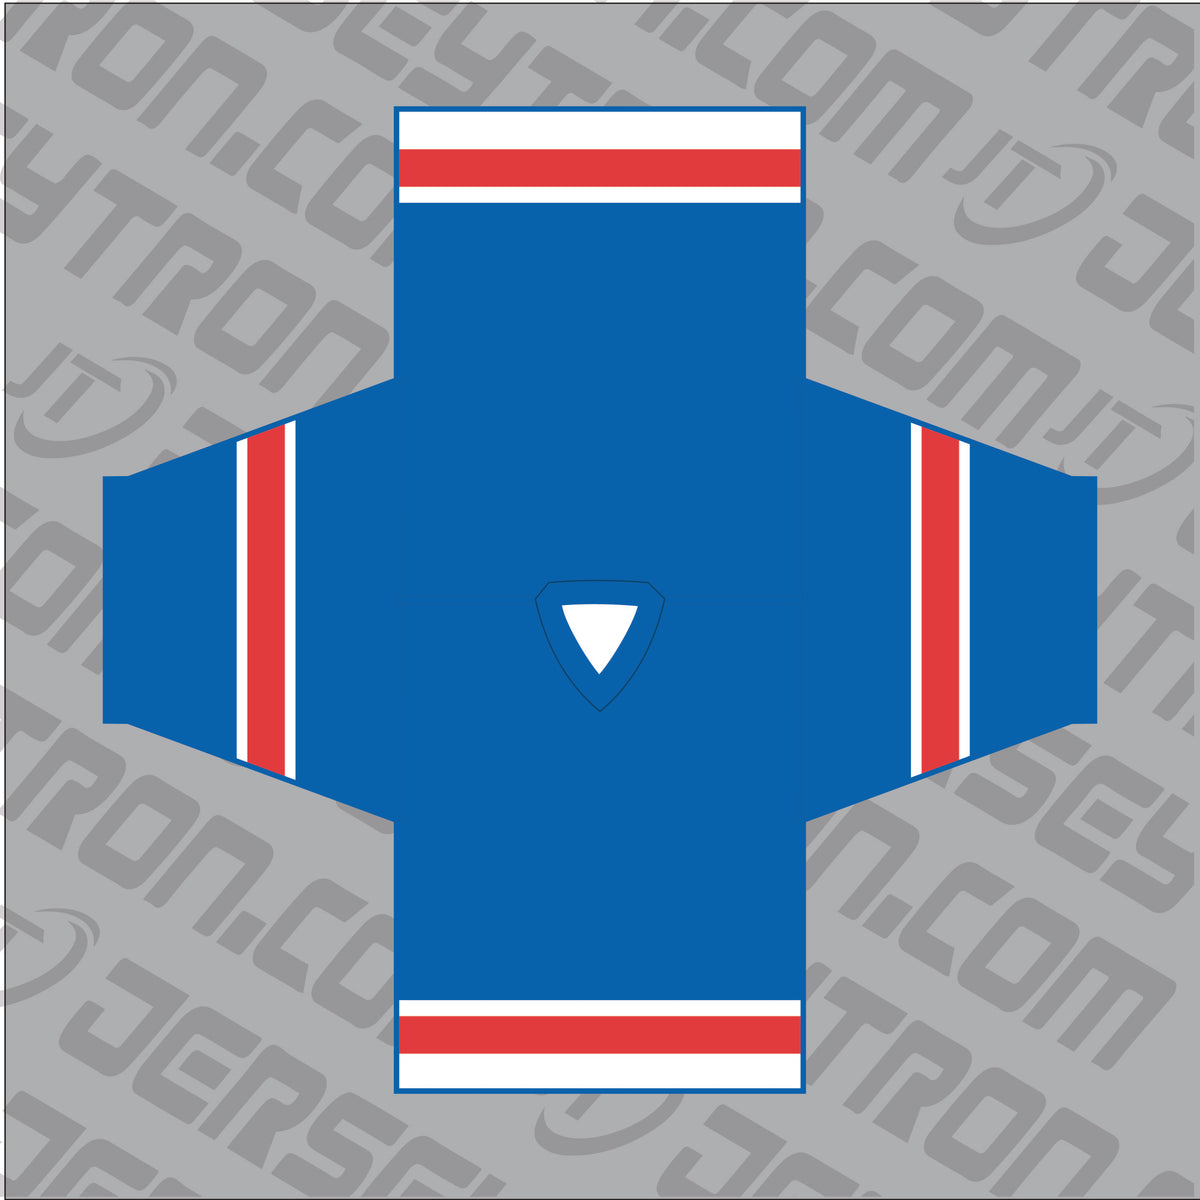 Sublimated Hockey Jersey - New York Rangers